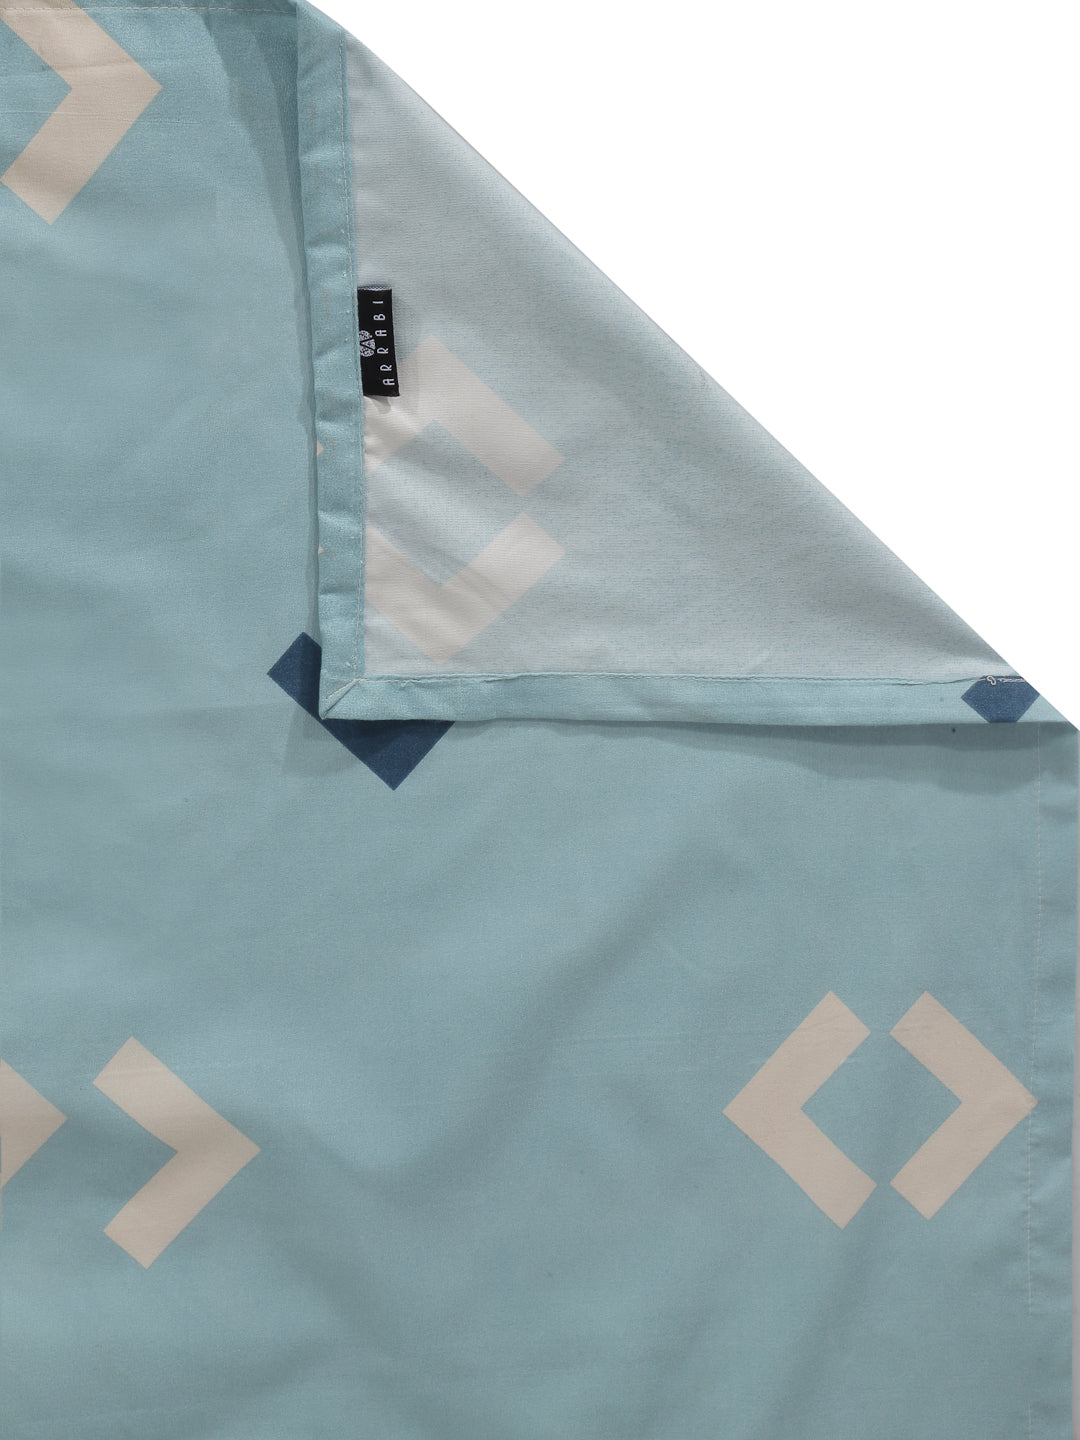 Arrabi Blue Goemetric Cotton Blend 8 SEATER Table Cover (215 x 150 cm)